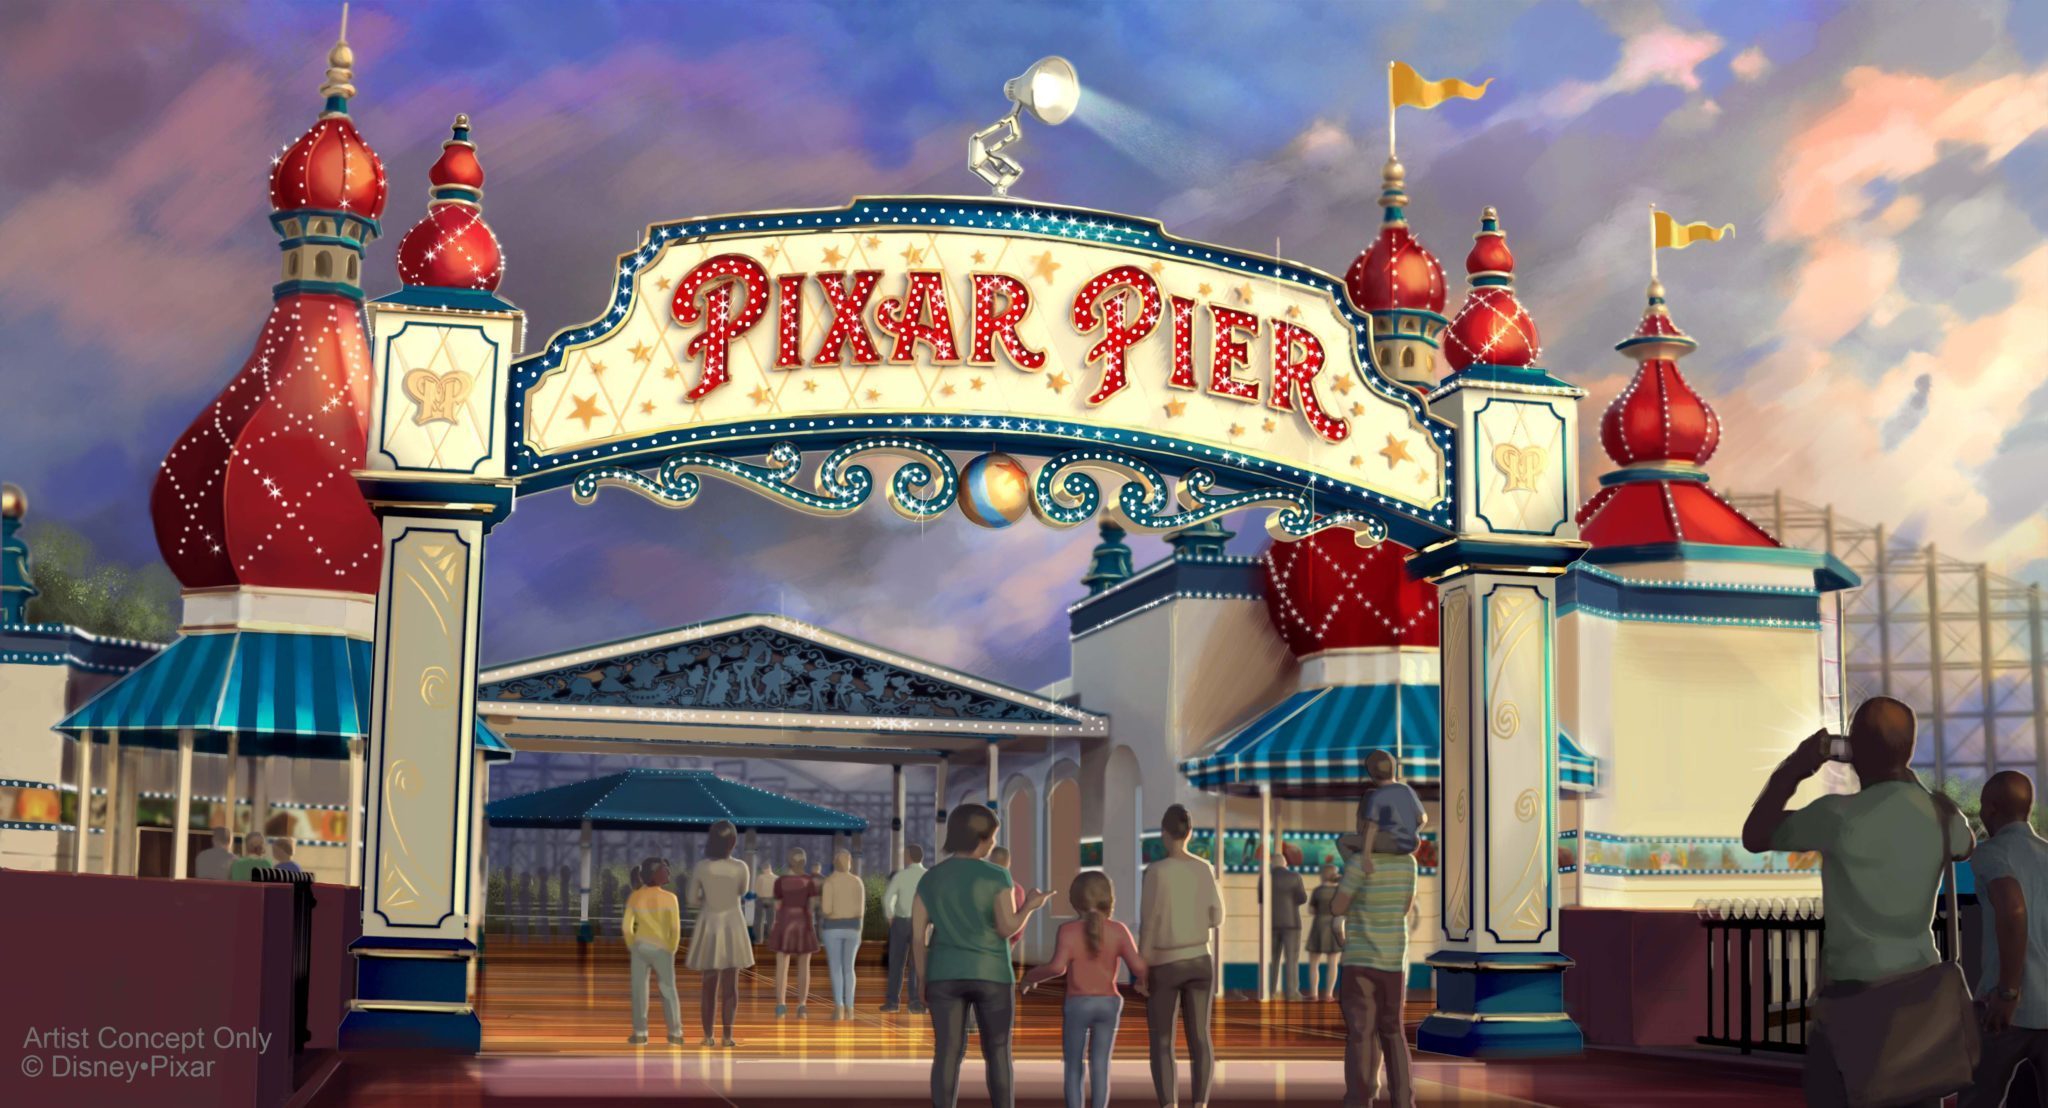 Pixar Pier artist rendering